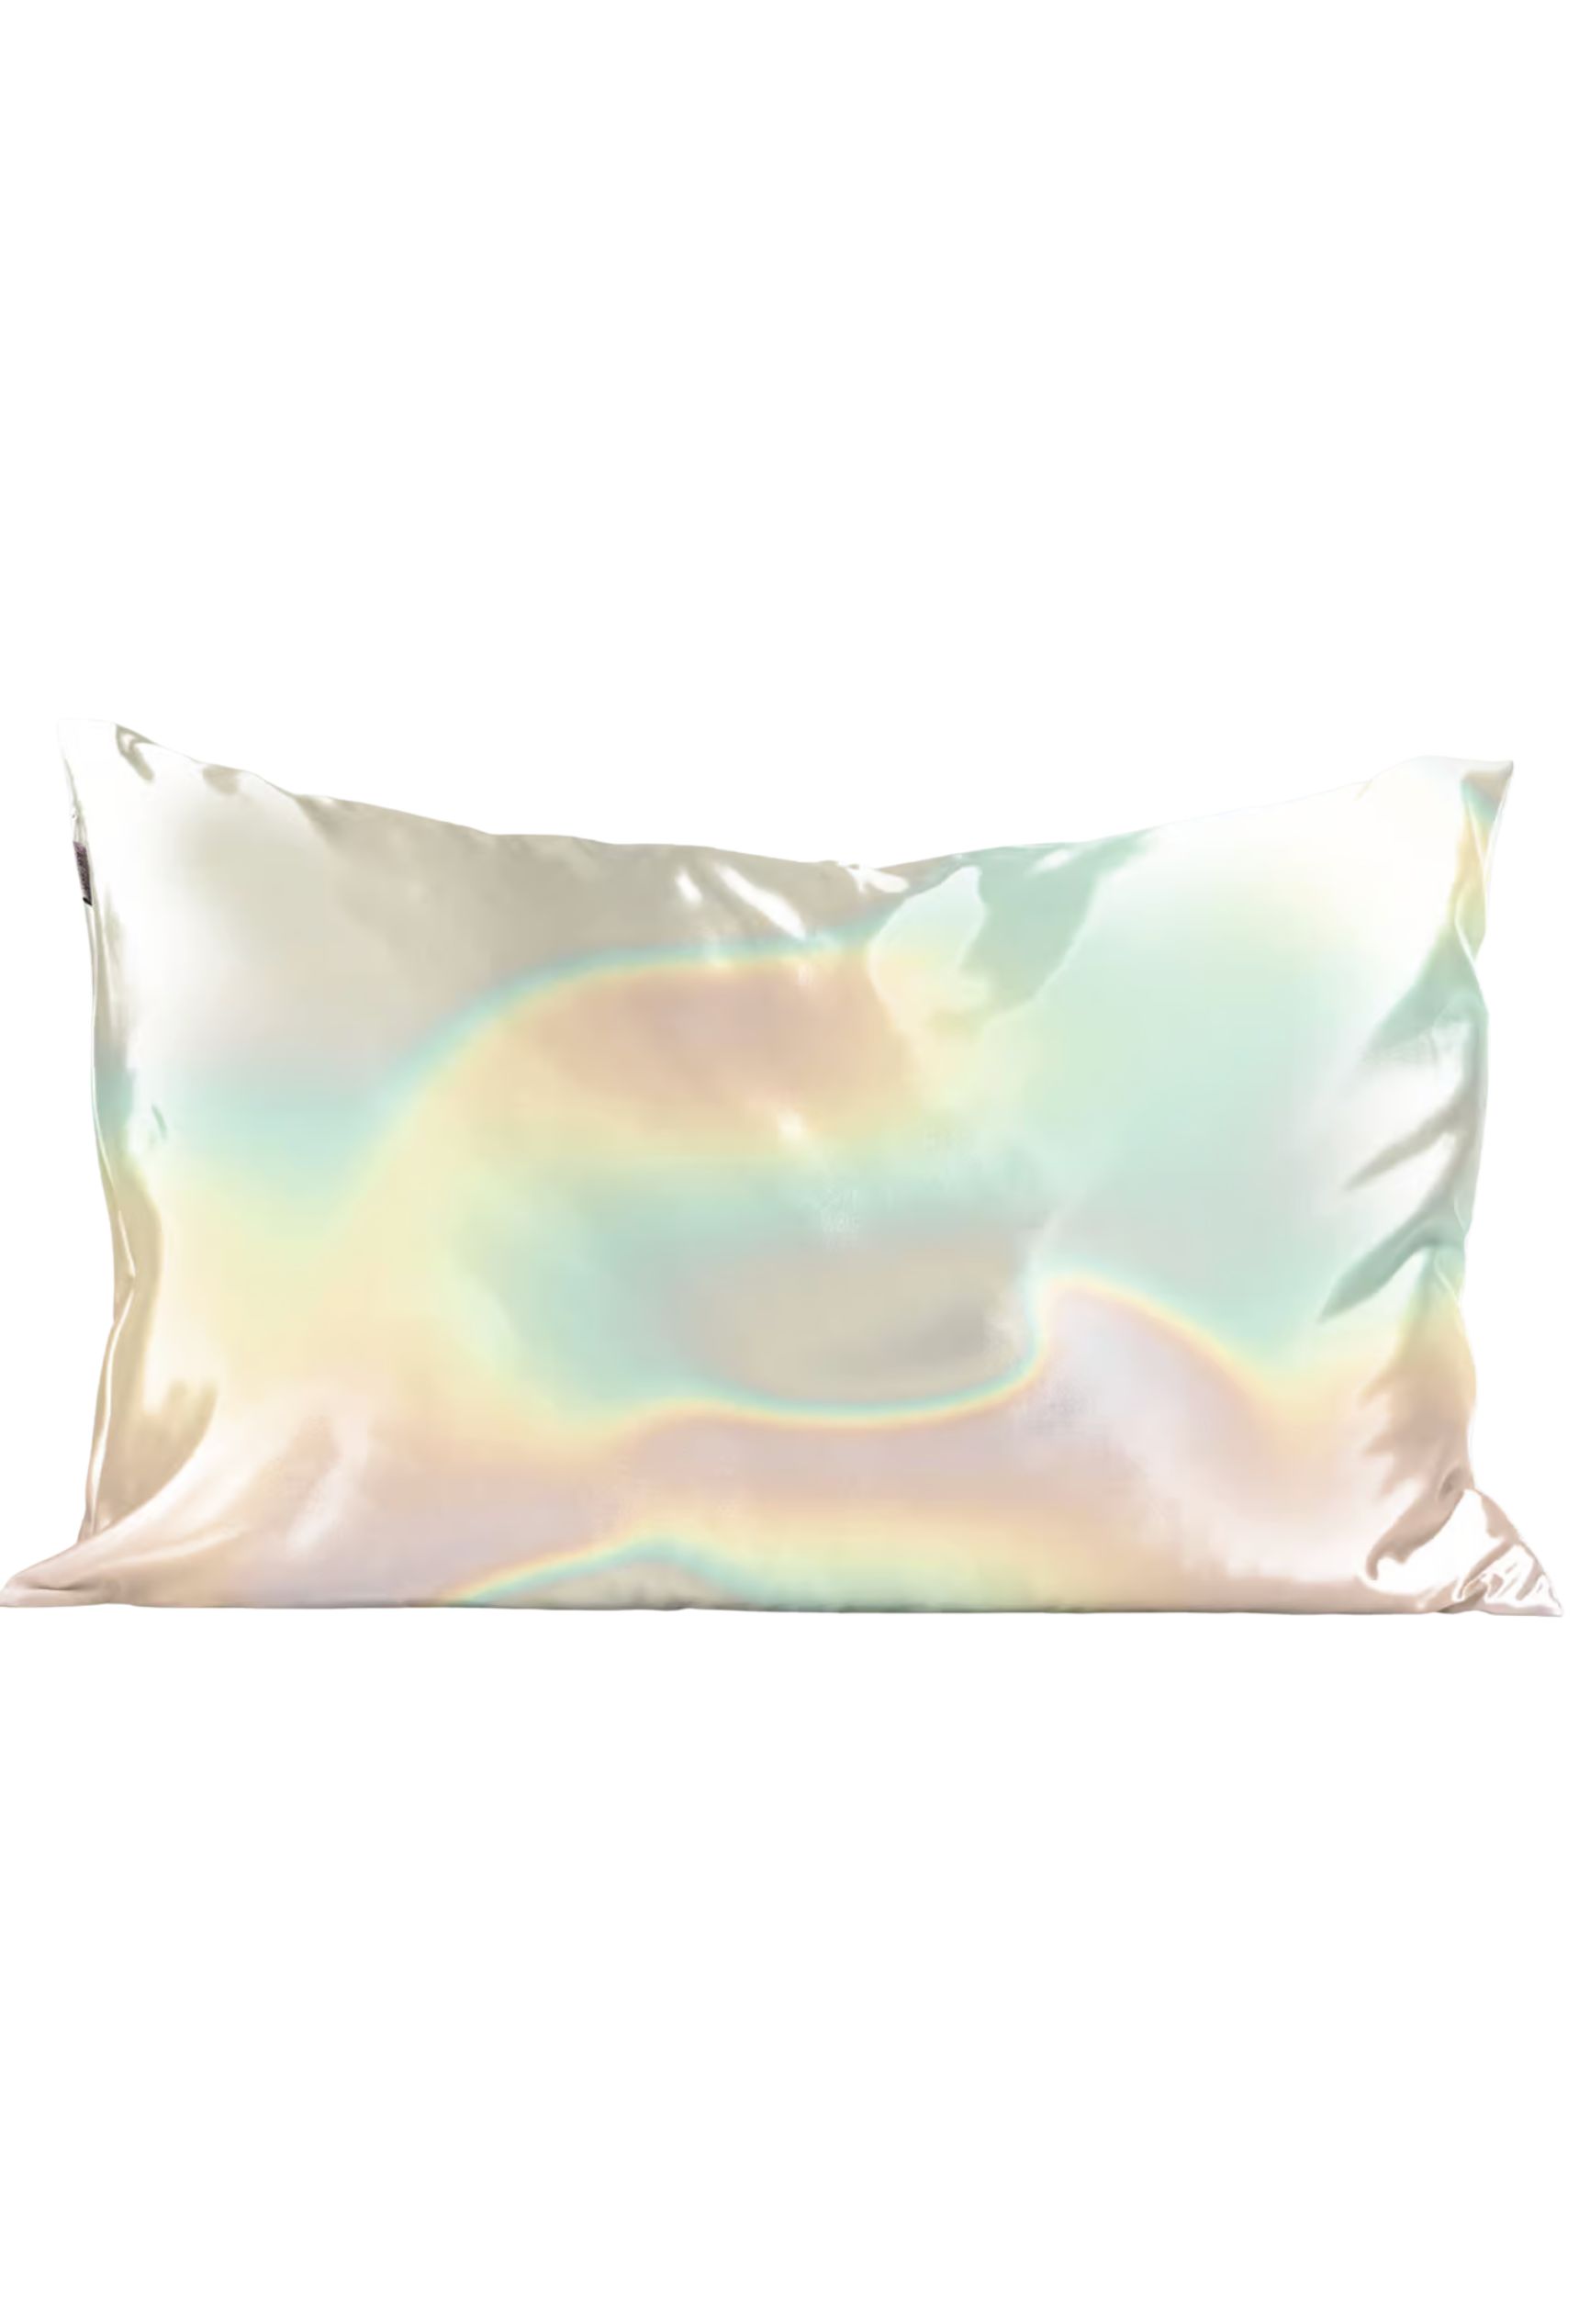 Kitsch Satin Pillowcase in Aura, satin pillowcase, aura colored, light pastel colored